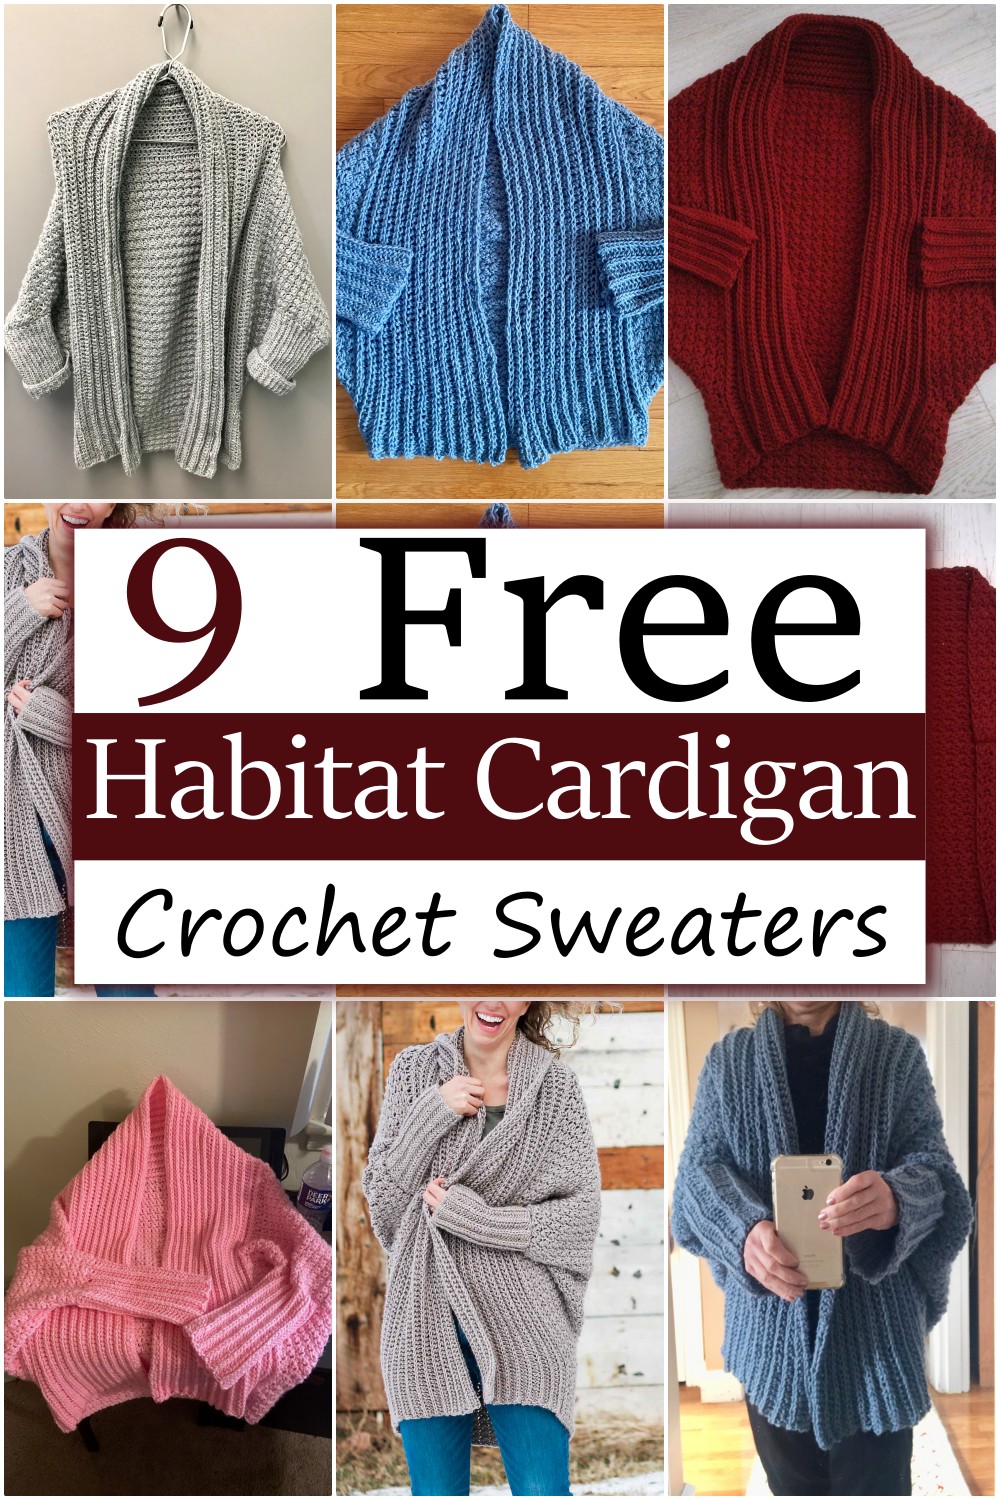 9 Habitat Cardigan Patterns - Crochet Sweaters